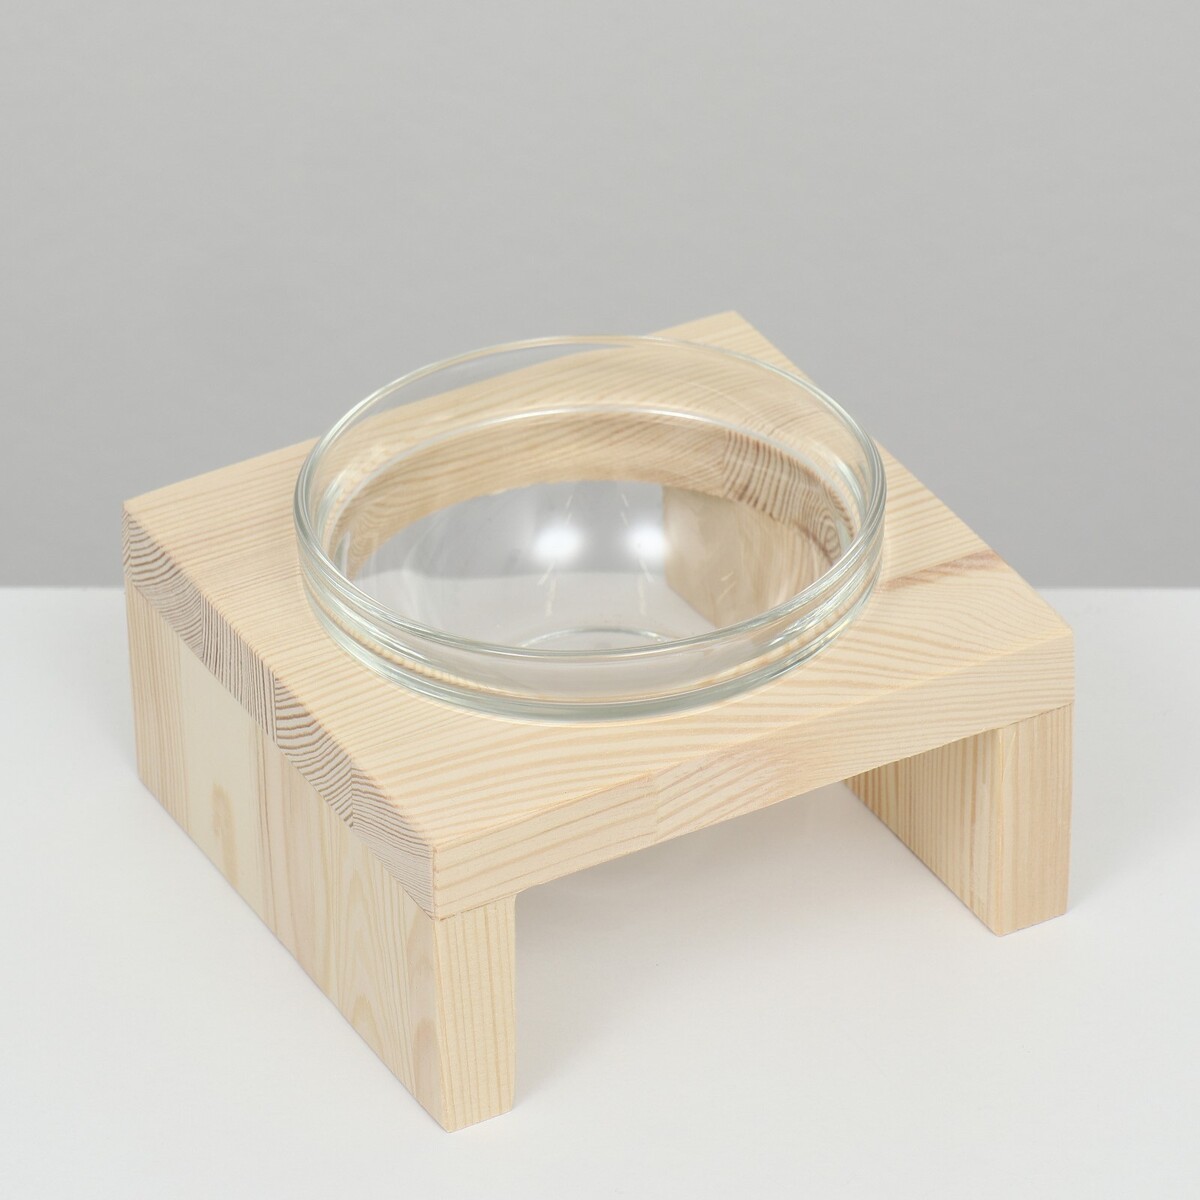 Подставка одинарная с миской из прозрачного стекла 16 х 14,5 х 6,5 см 250 мл подставка для зубочисток стекло фигурная 5х4 см lefard muza 355 271